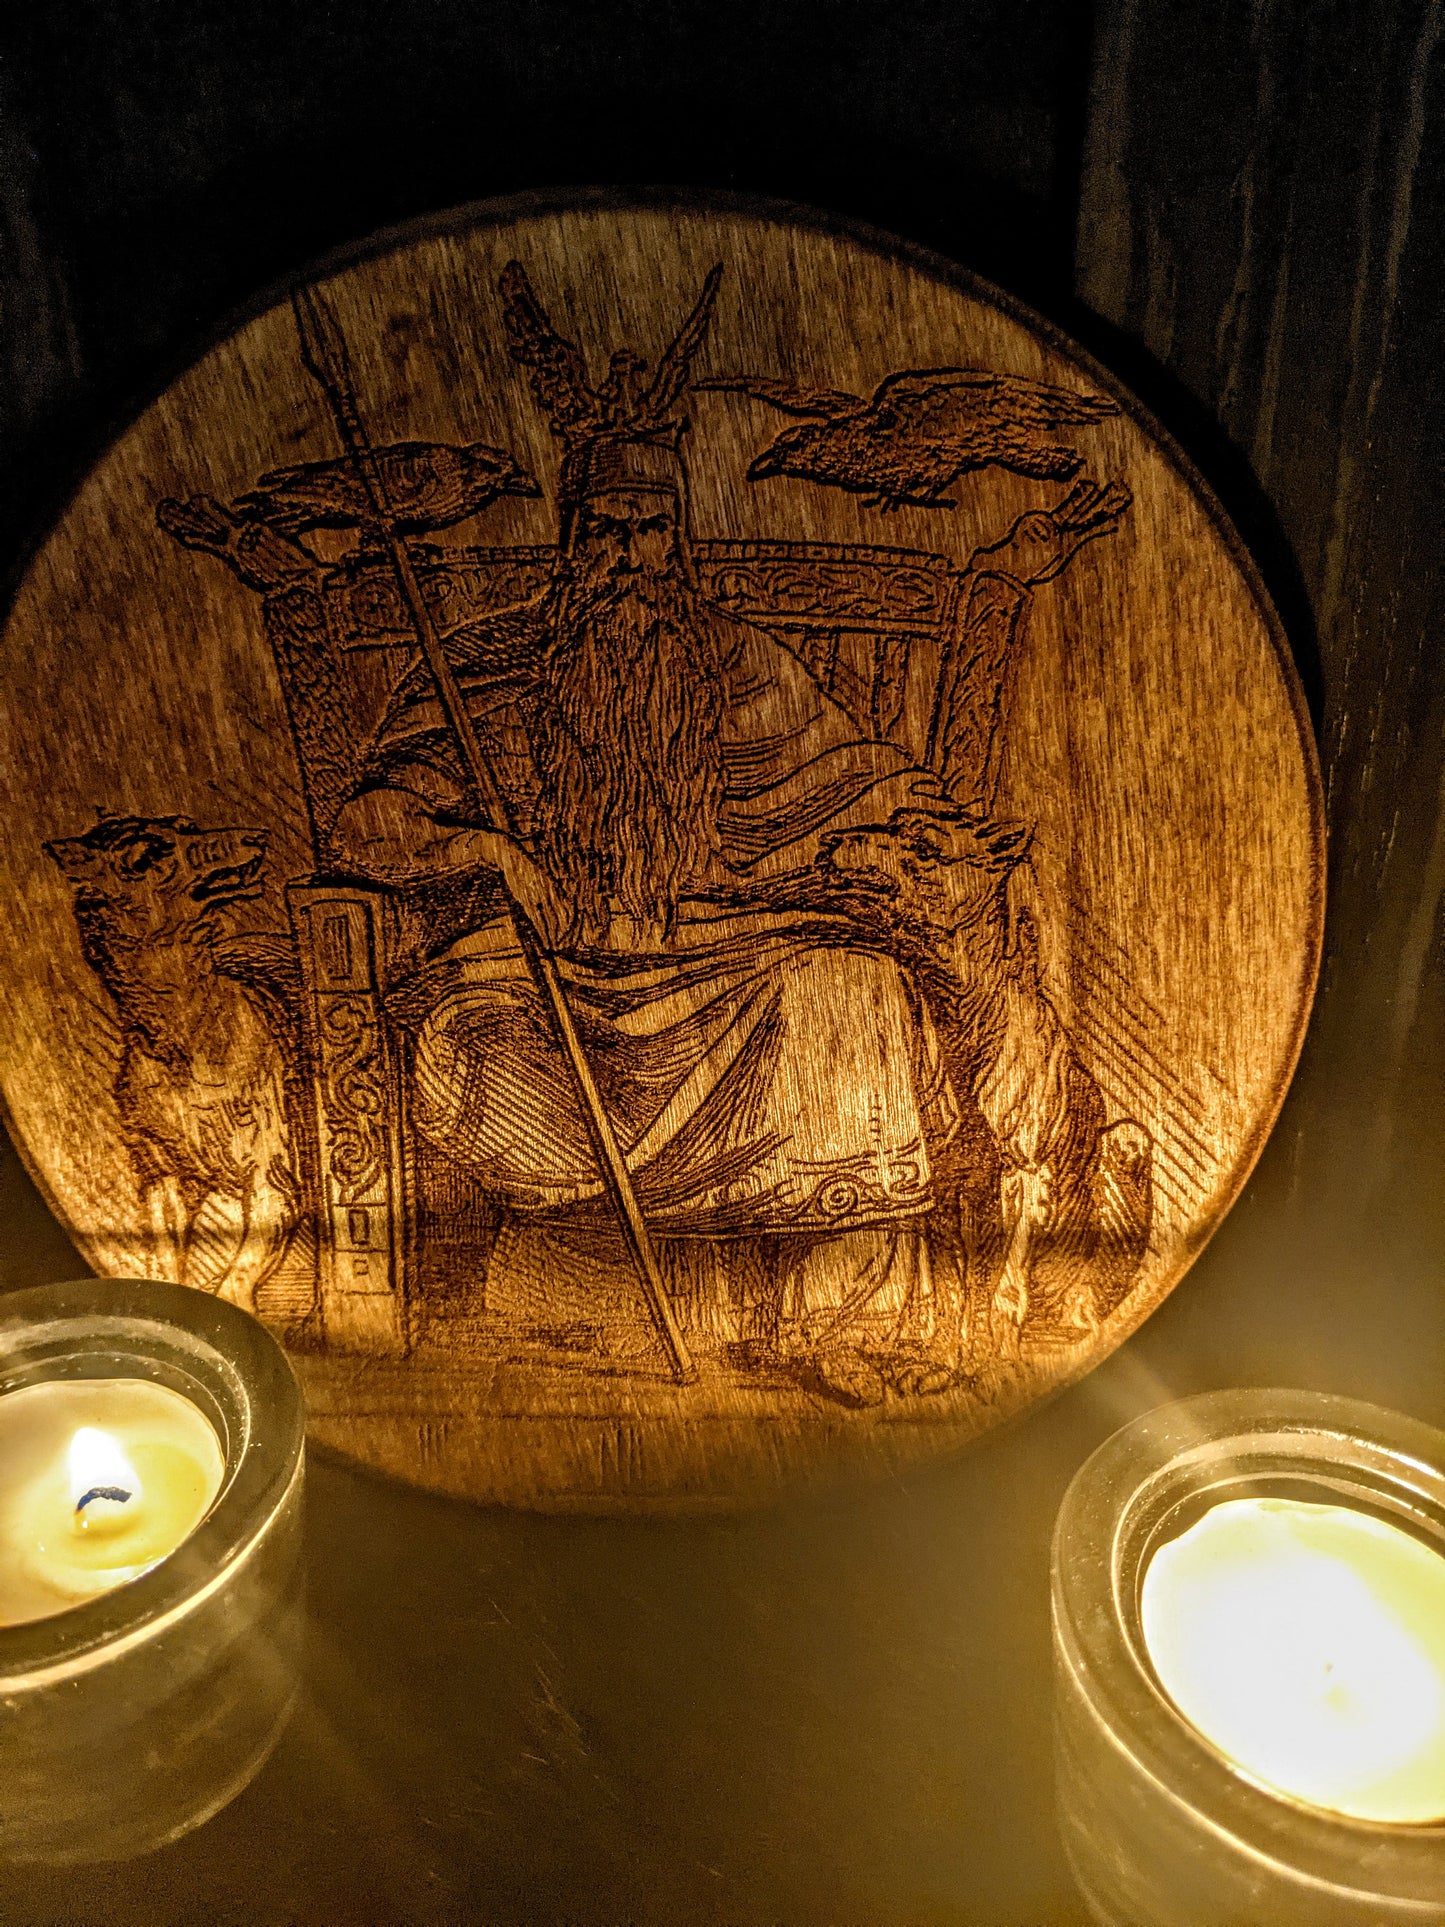 Odin Freki Geri Wolves Altar Plate Art Engraving Heathen Asatru Norse Pagan Decor